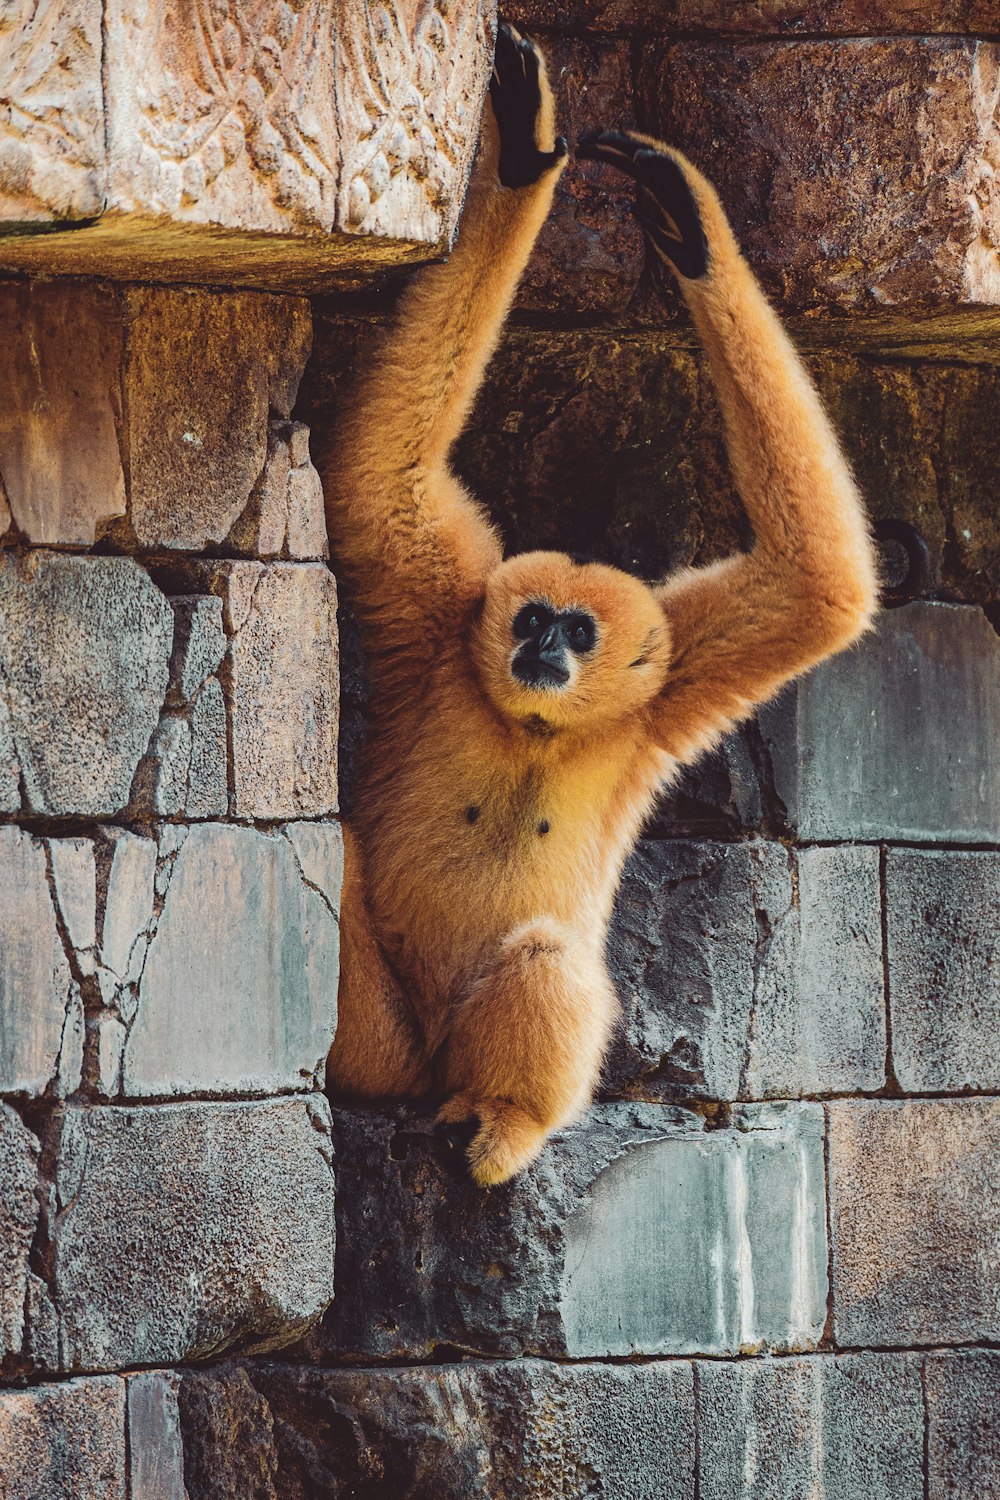 a monkey hanging upside down on a brick wall